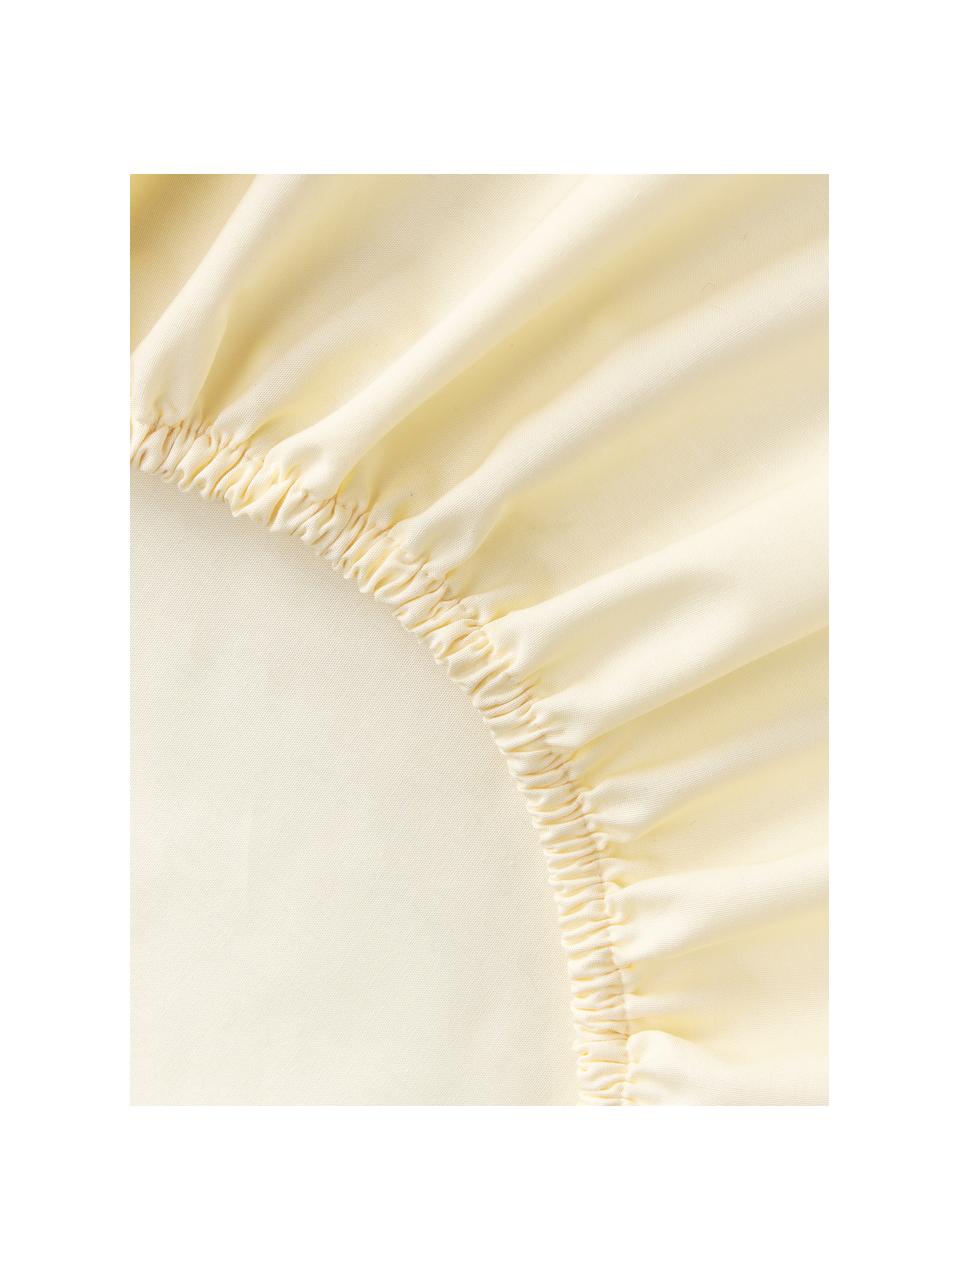 Sábana bajera de algodón percal con somier Elsie, Amarillo claro, Cama 90 cm (90 x 200 x 35 cm)